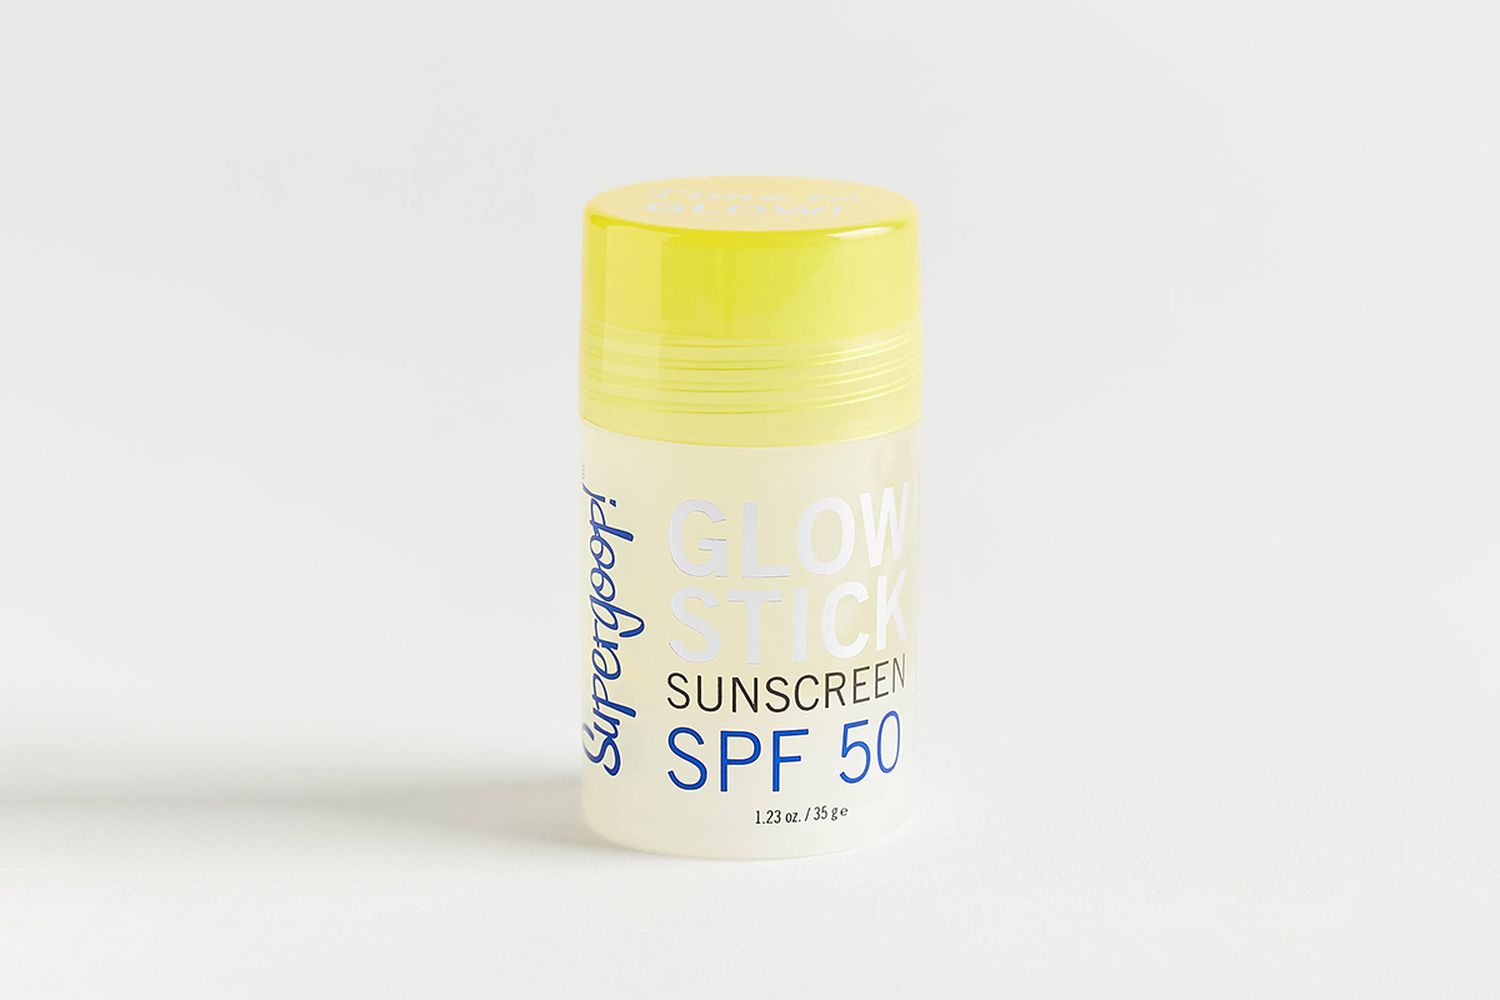 Glow Stick SPF 50 Sunscreen